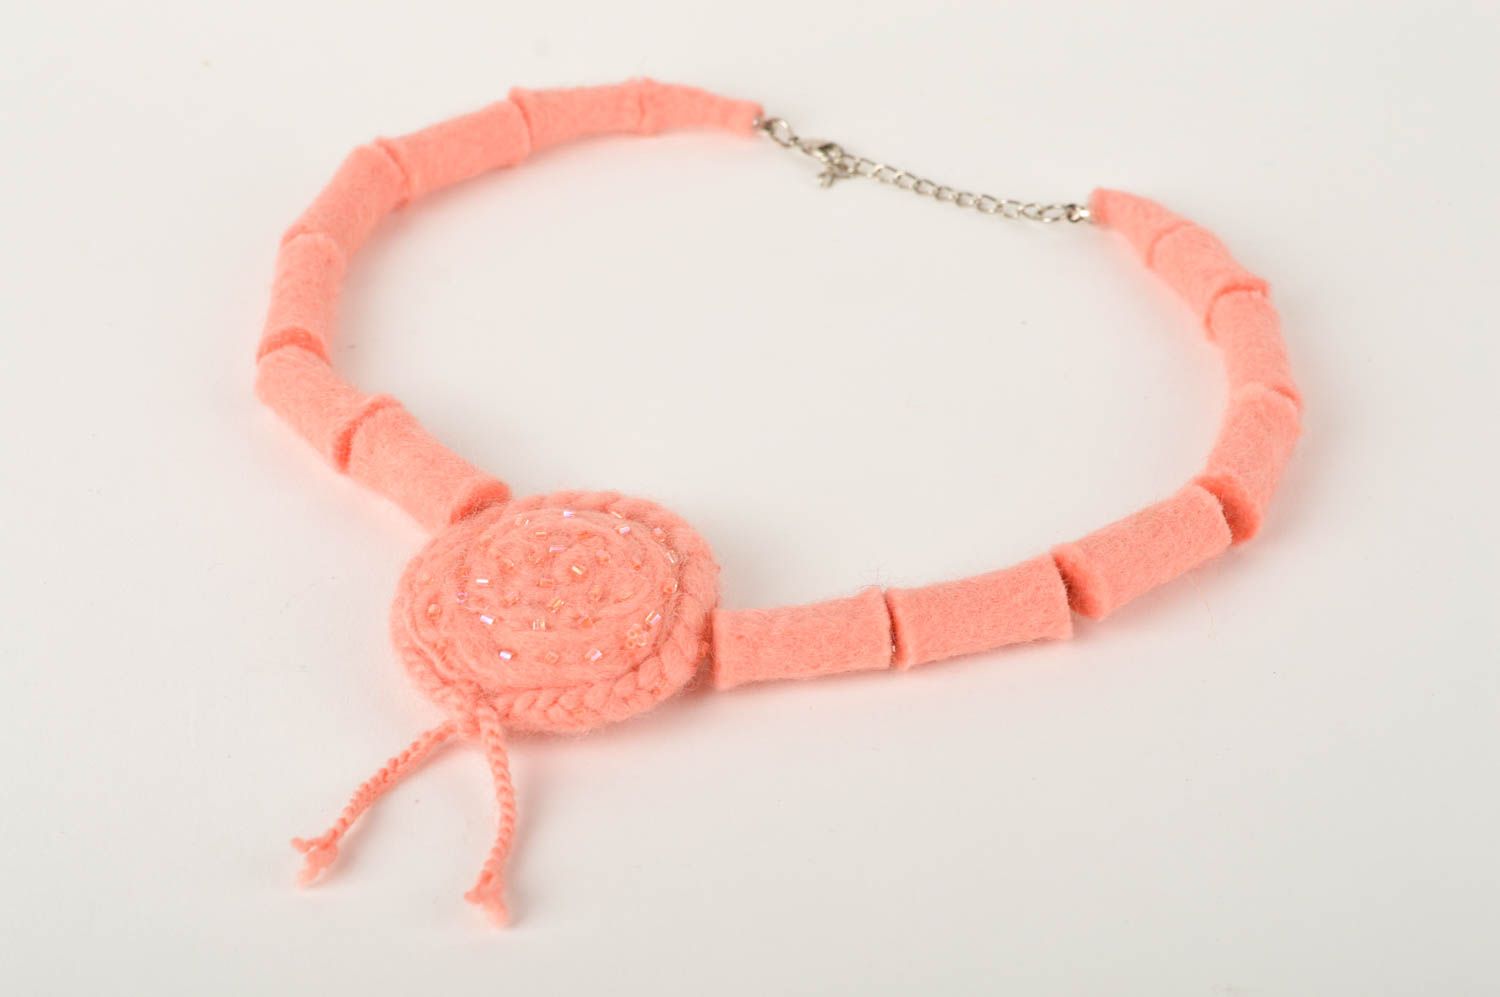 Handmade necklace designer woolen necklace for women gift ideas unusual jewelry photo 5